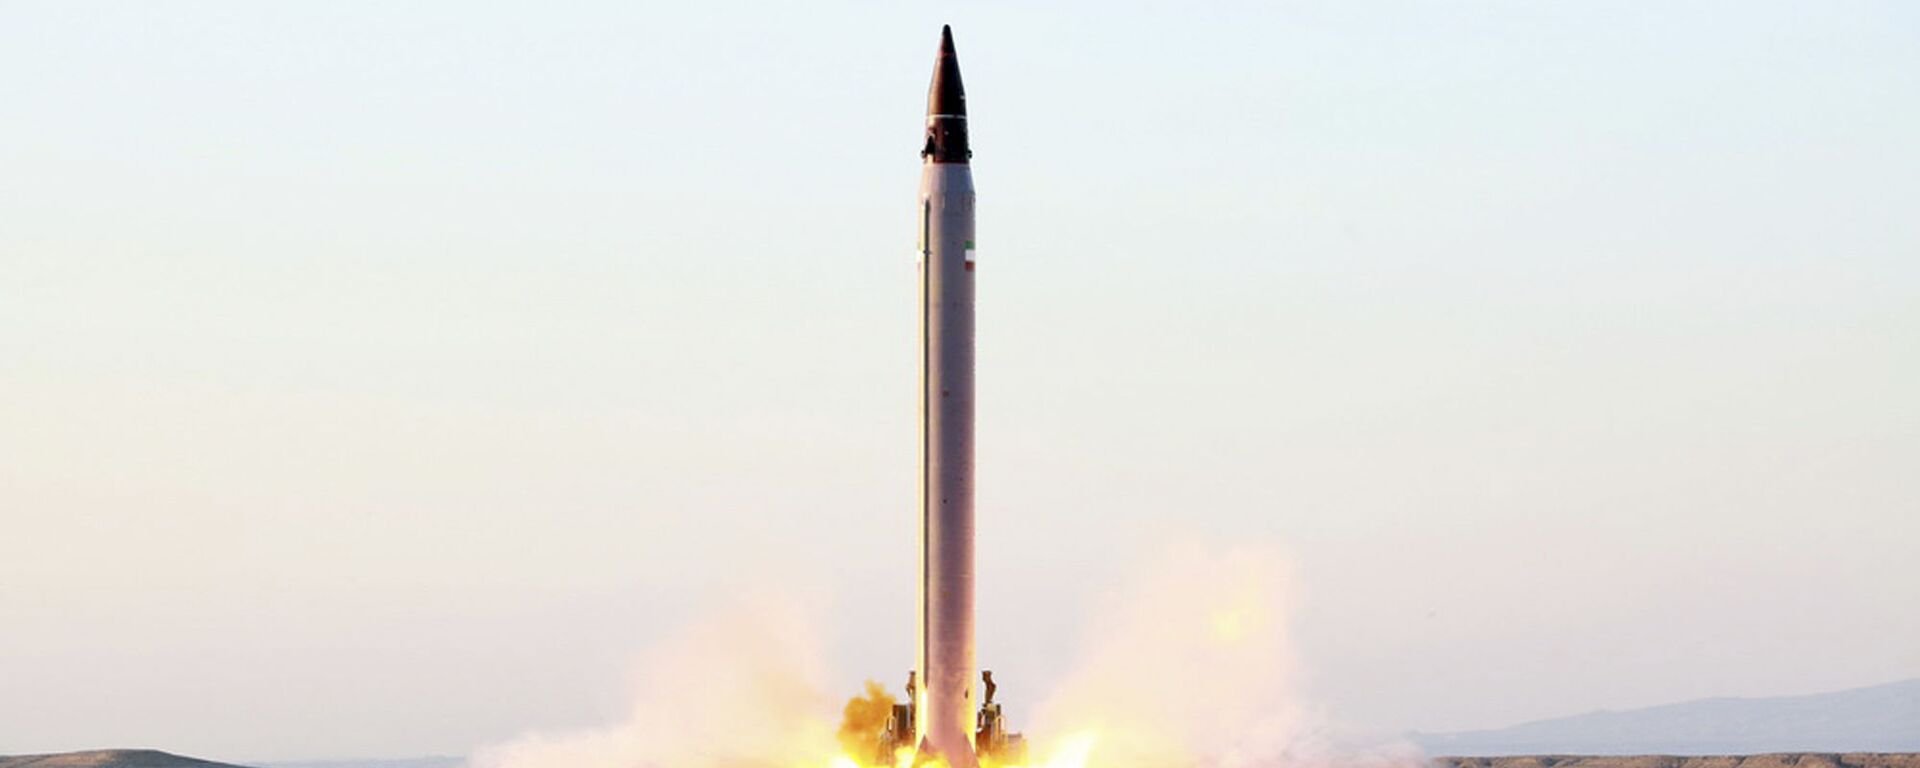 إطلاق صاروخ بالستي إيراني - سبوتنيك عربي, 1920, 17.02.2021